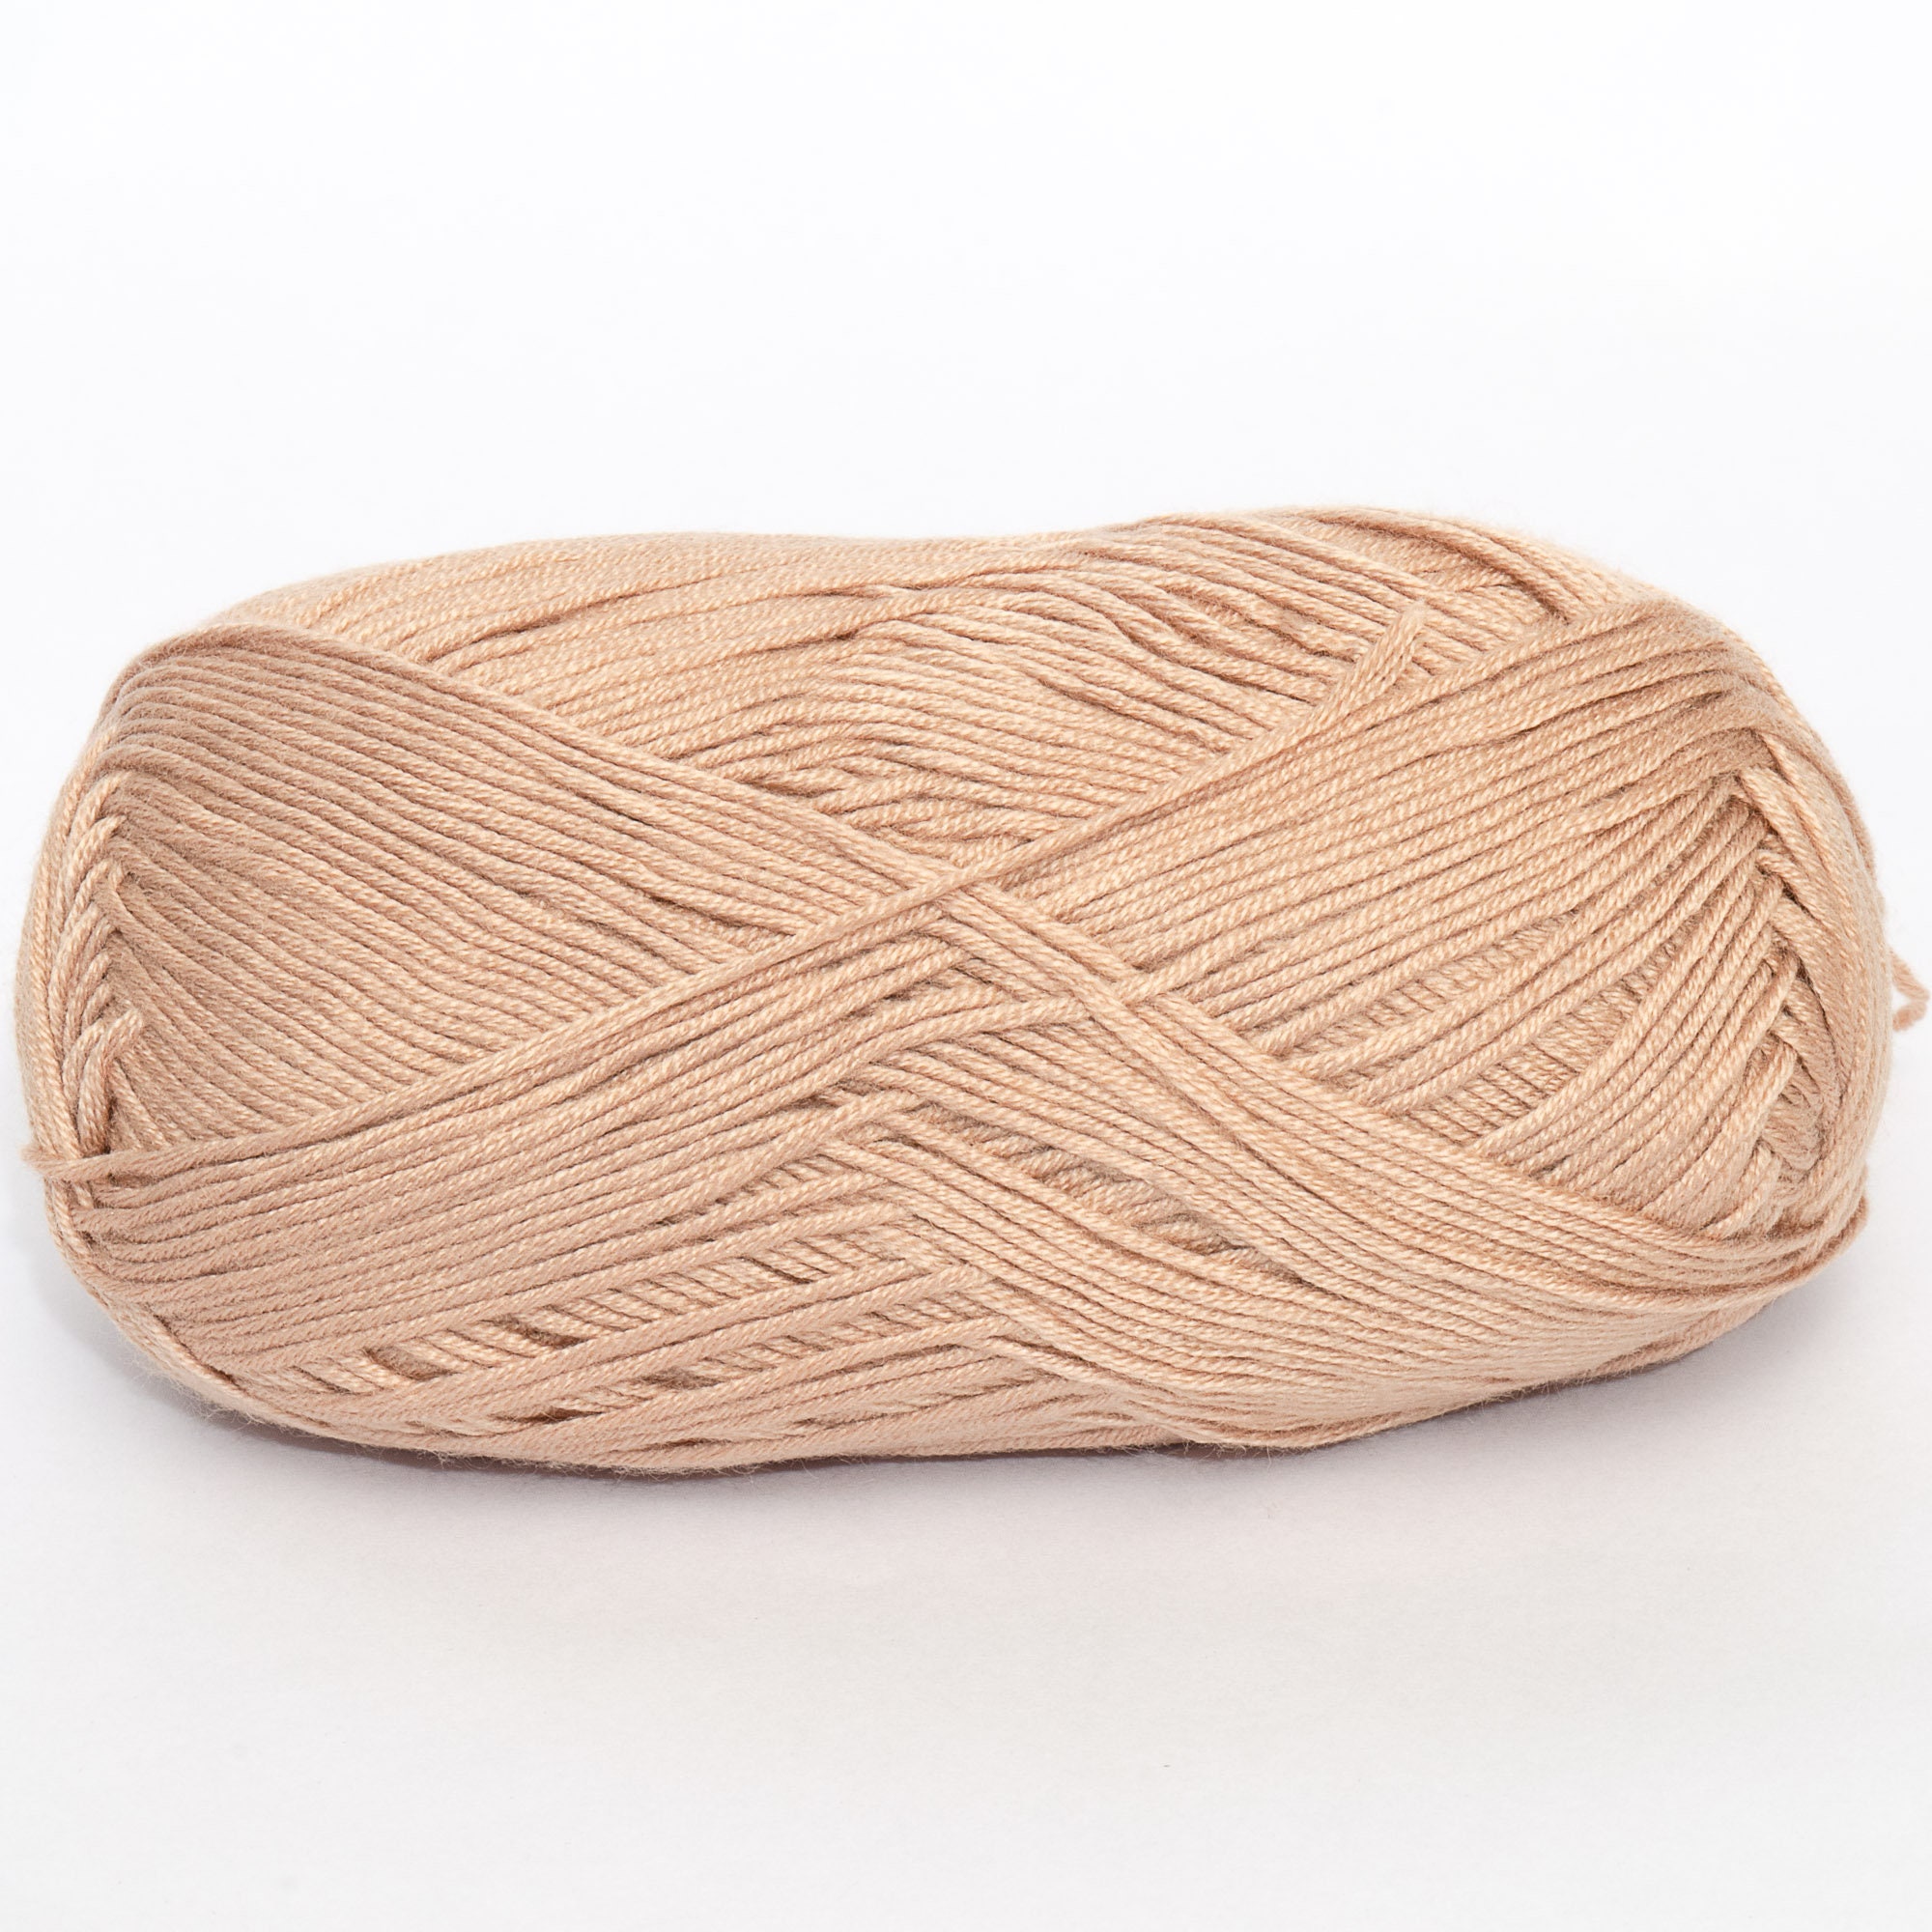 Organic Cotton 20/2 Weaving Yarn-5 Pound Cone-natural 